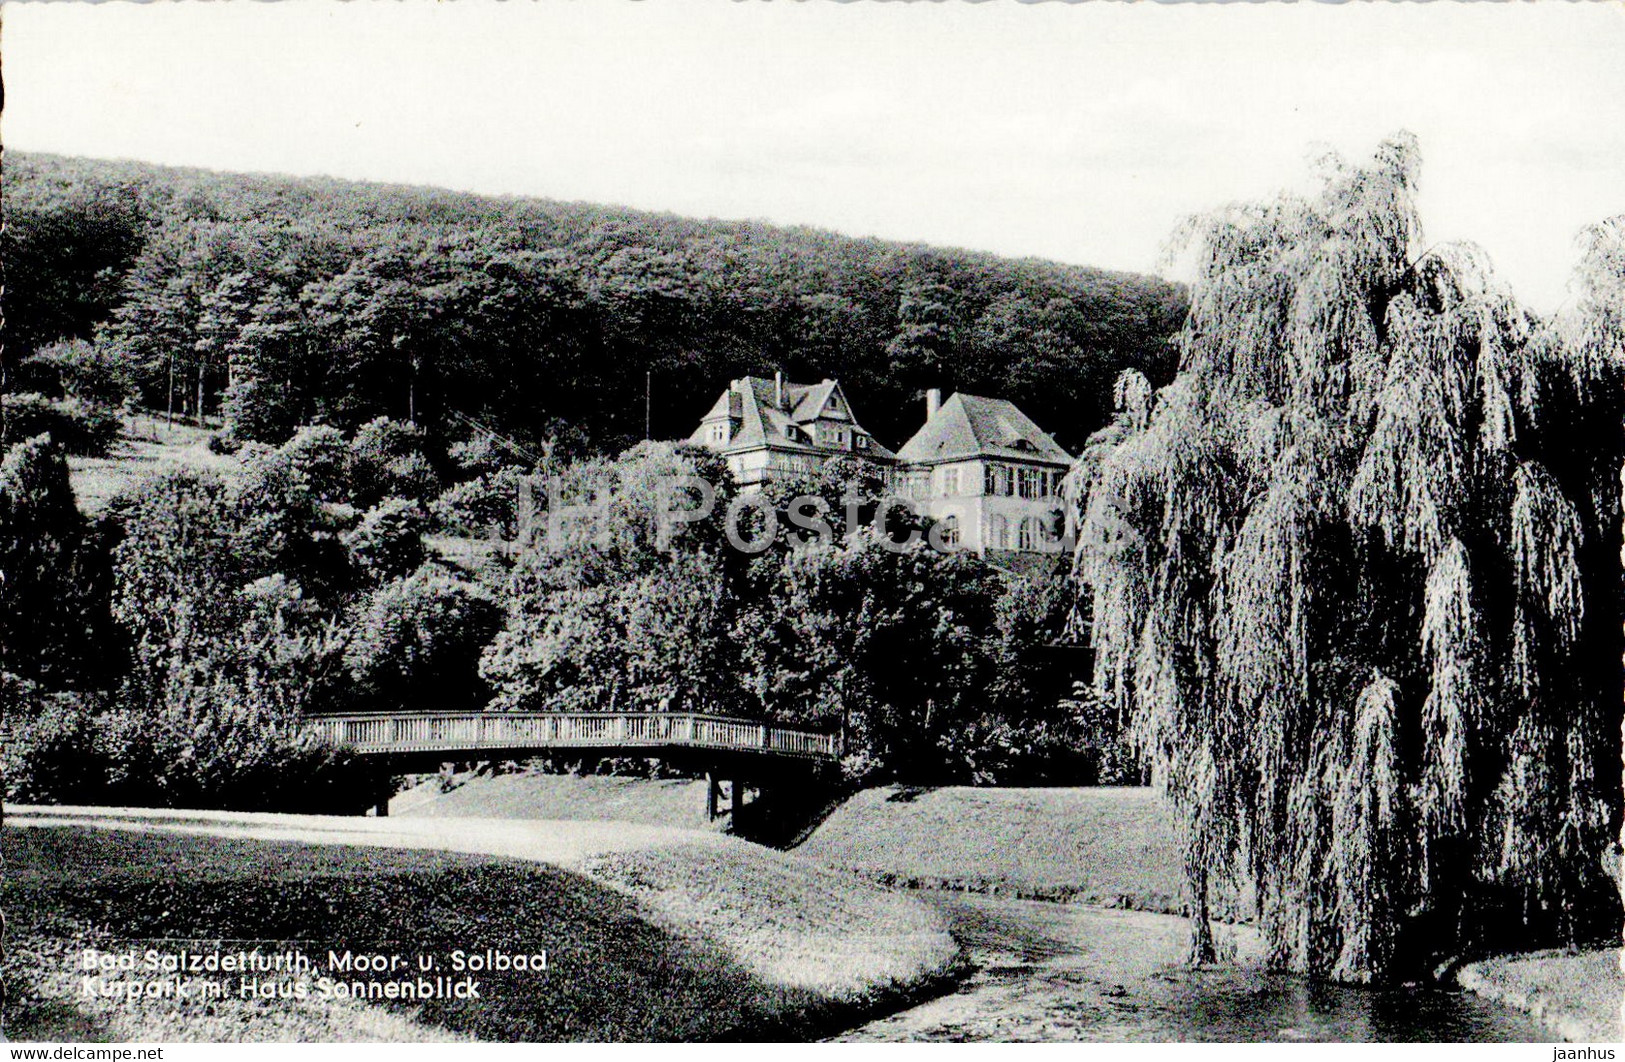 Bad Salzdetfurth - Moor U Solbad - Kurpark M Haus Sonnenblick - Old Postcard - Germany - Used - Bad Salzdetfurth